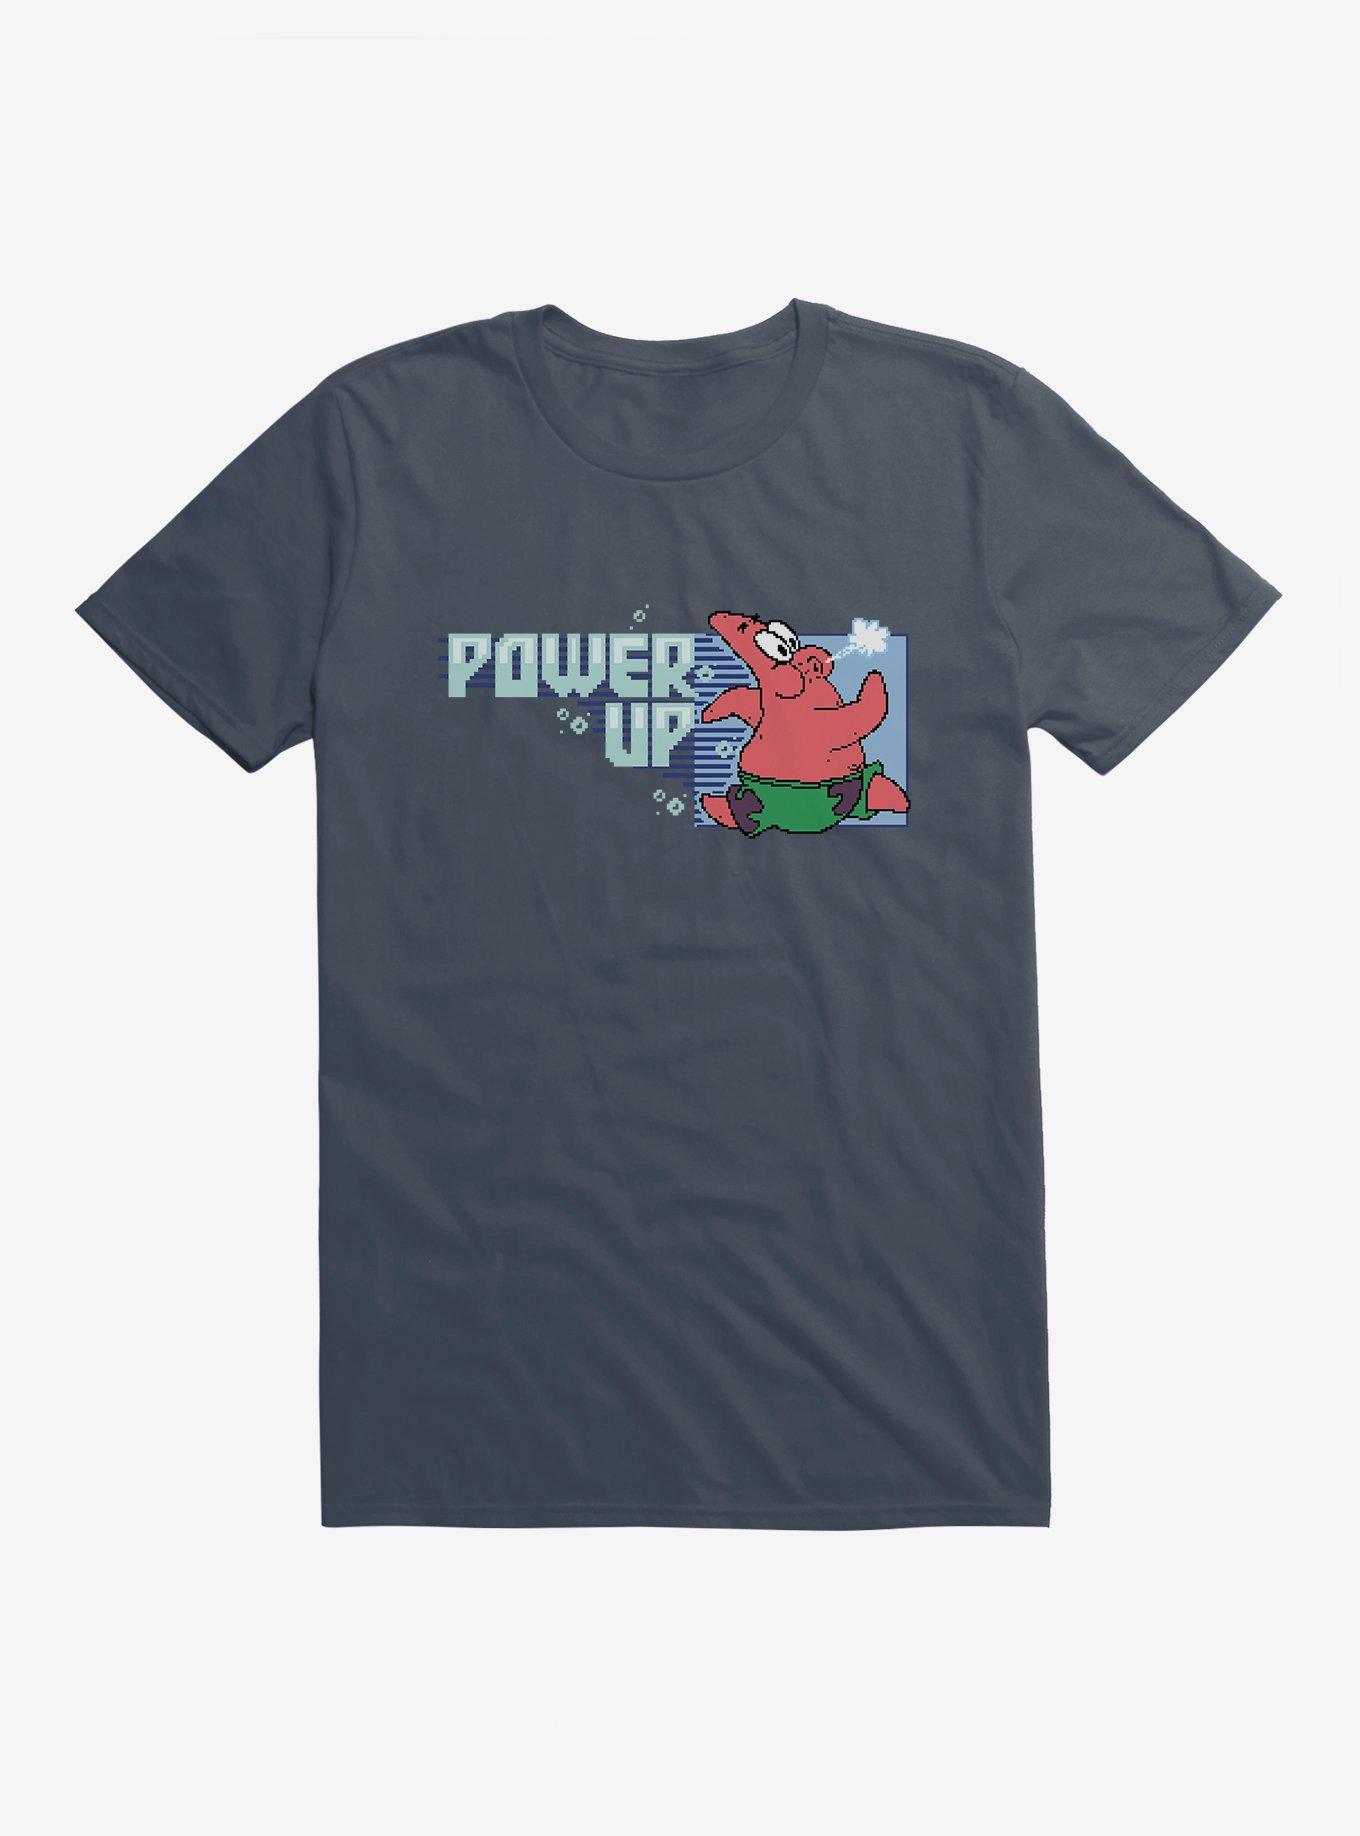 SpongeBob SquarePants Power Up Patrick T-Shirt